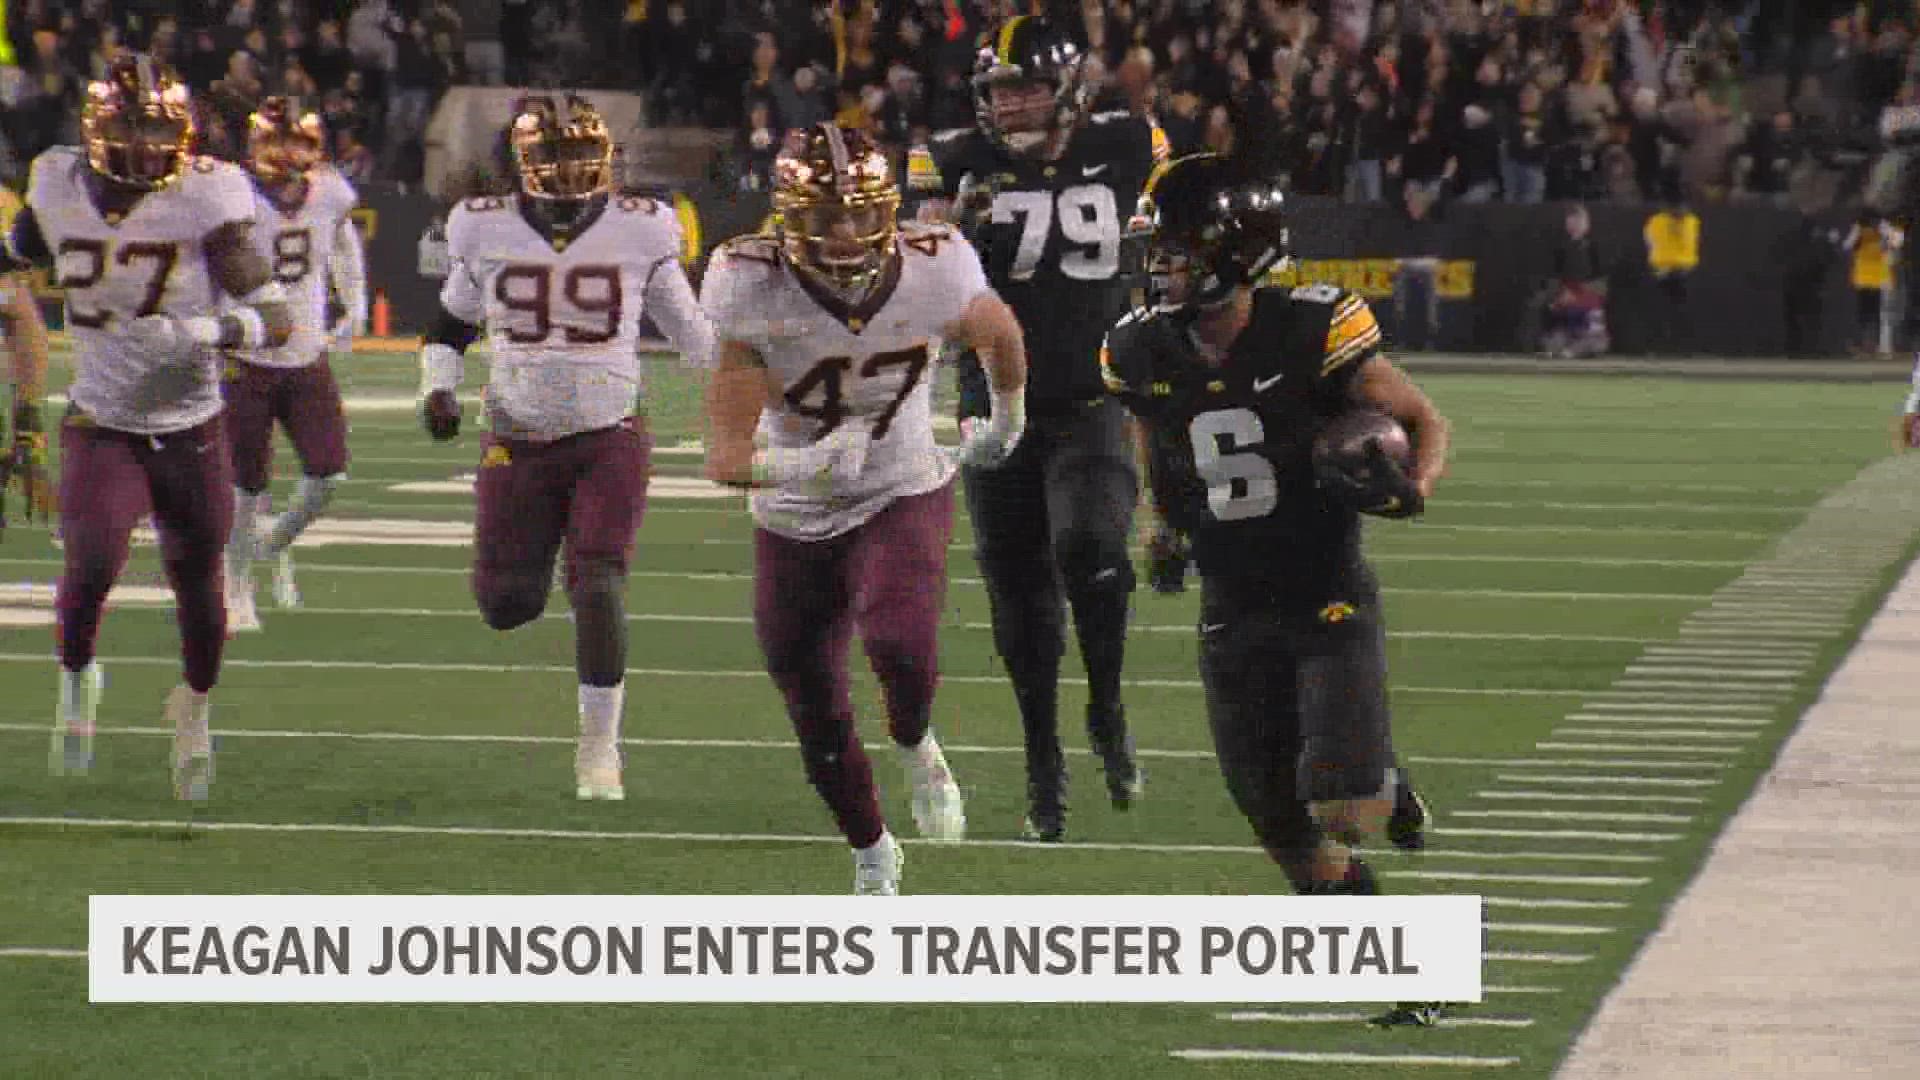 After an injury-plagued season, sophomore wide receiver Keagan Johnson is leaving Iowa.